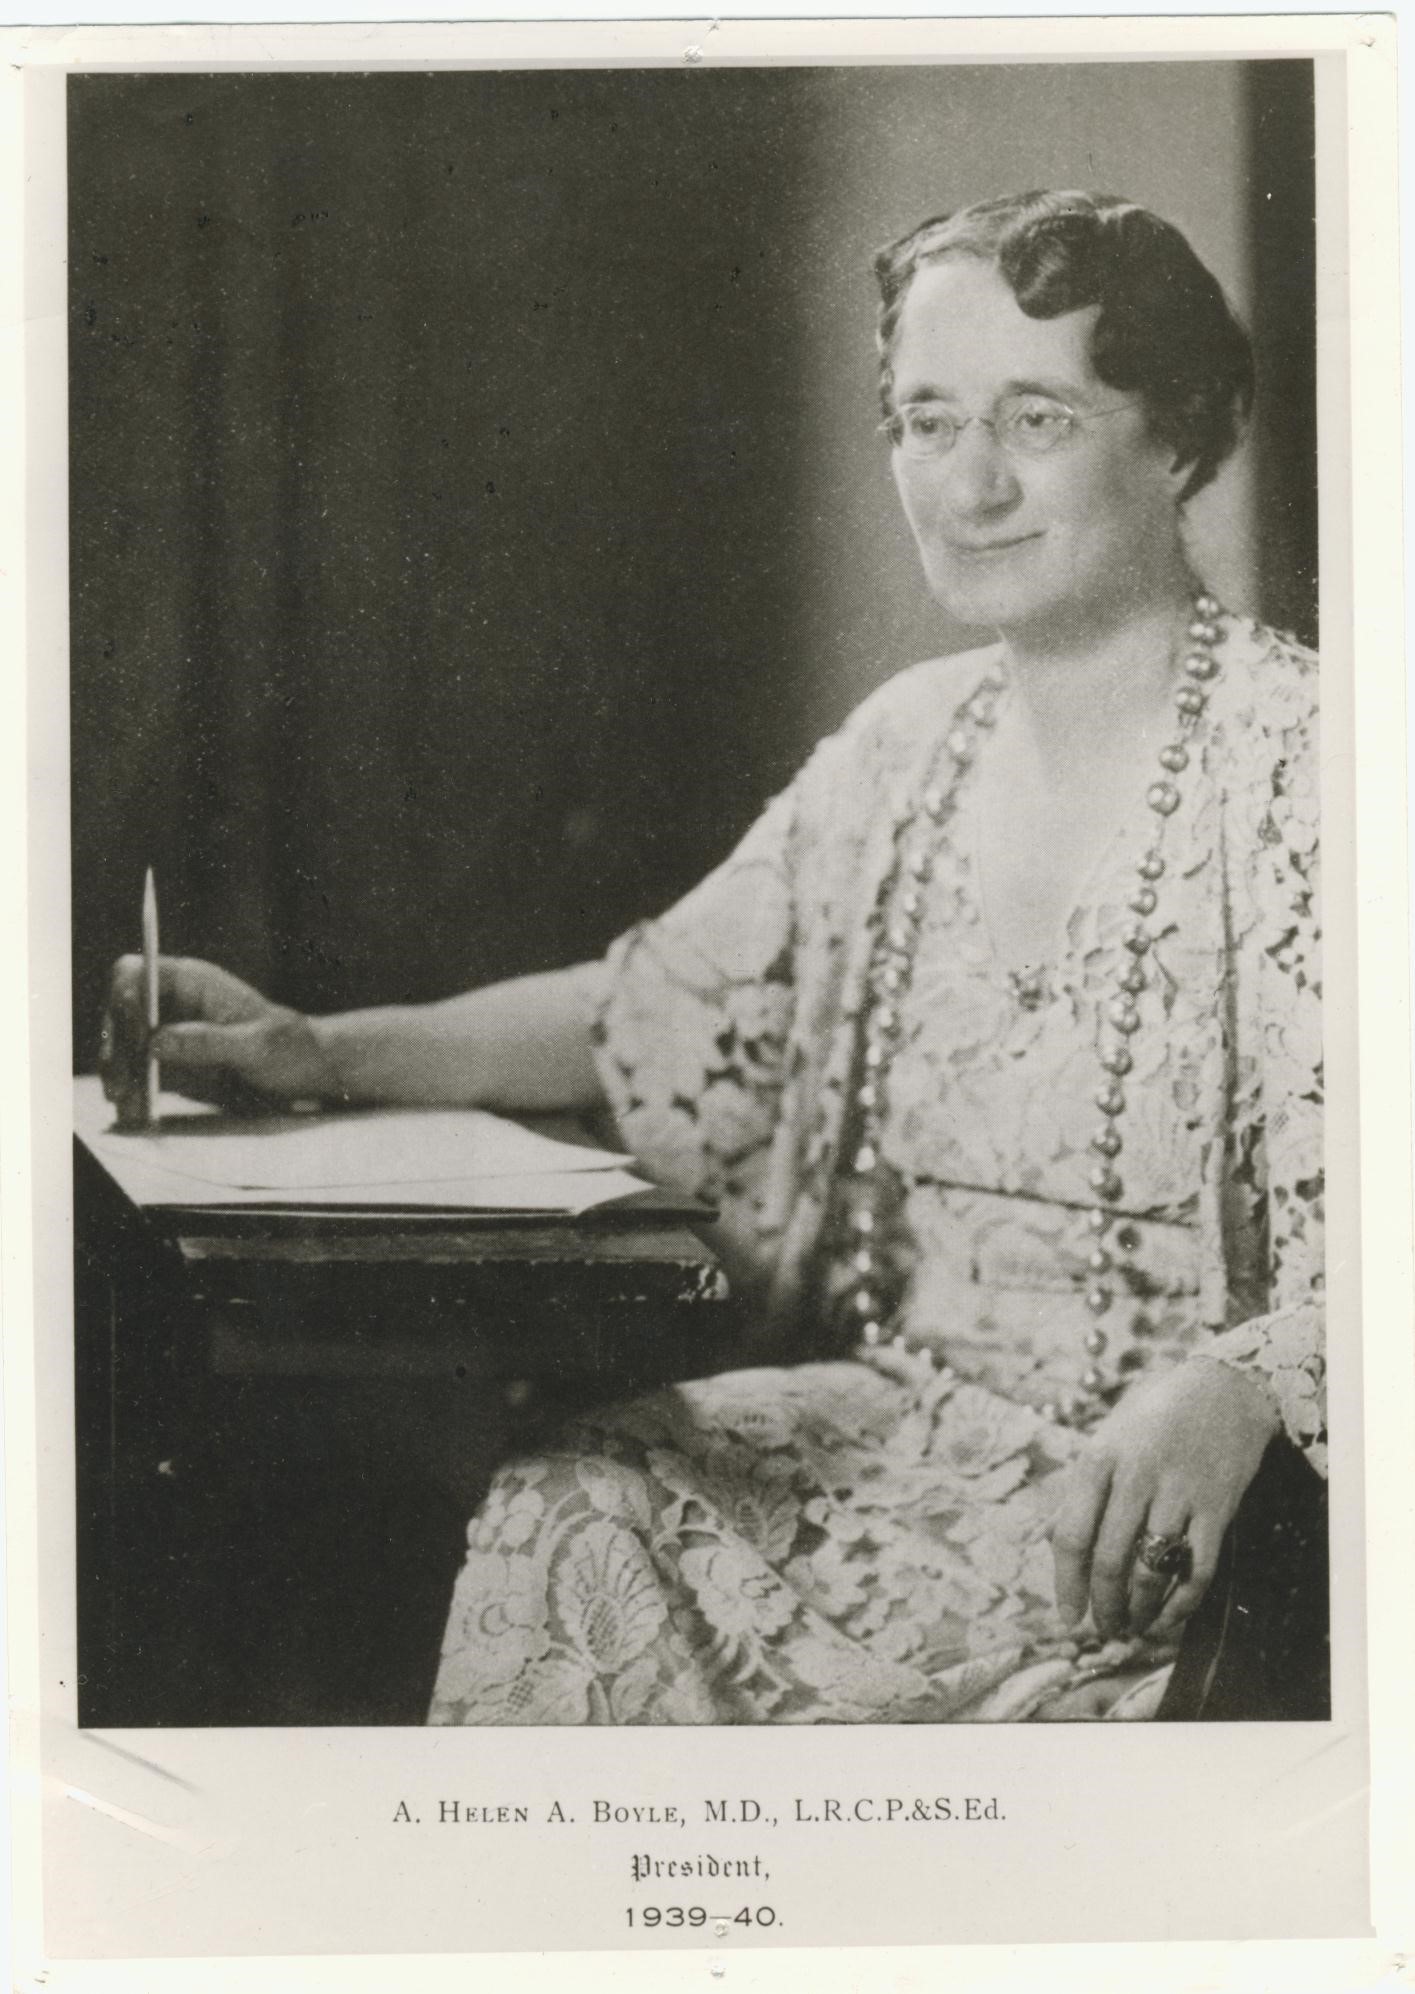 Dr Helen Boyle